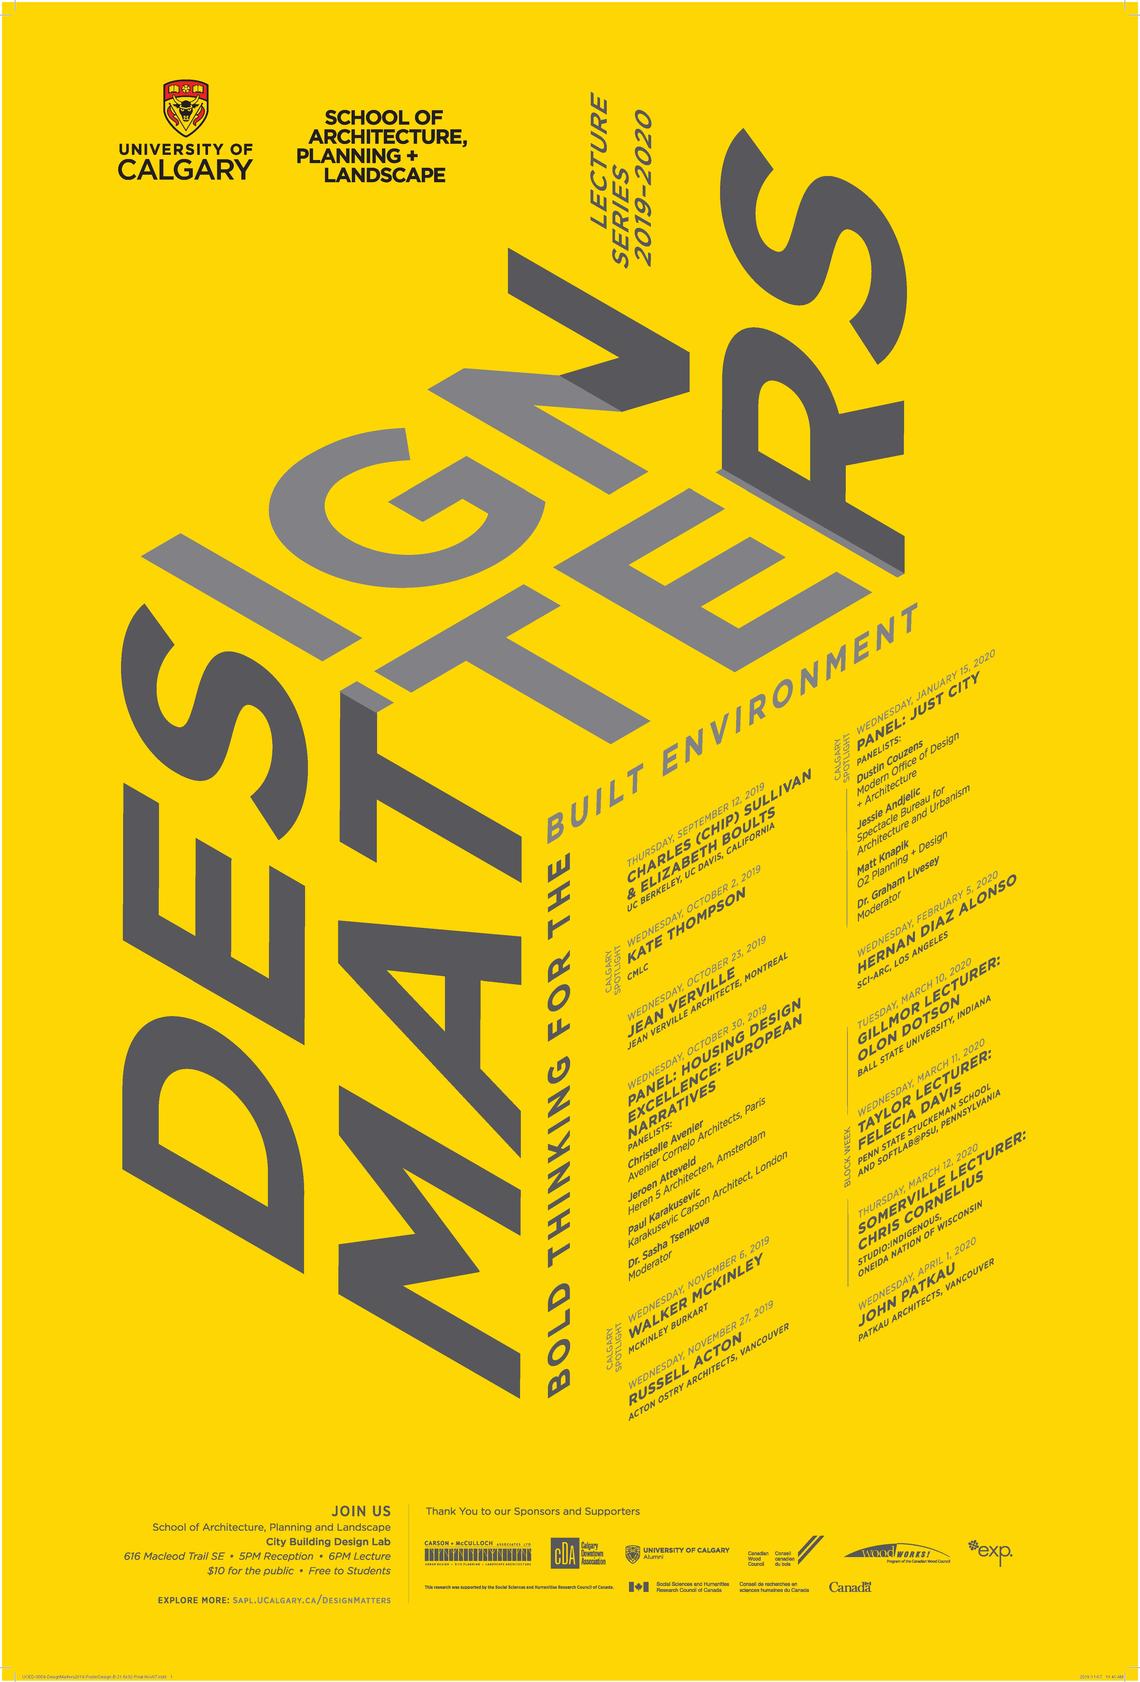 Design Matters 2019/20